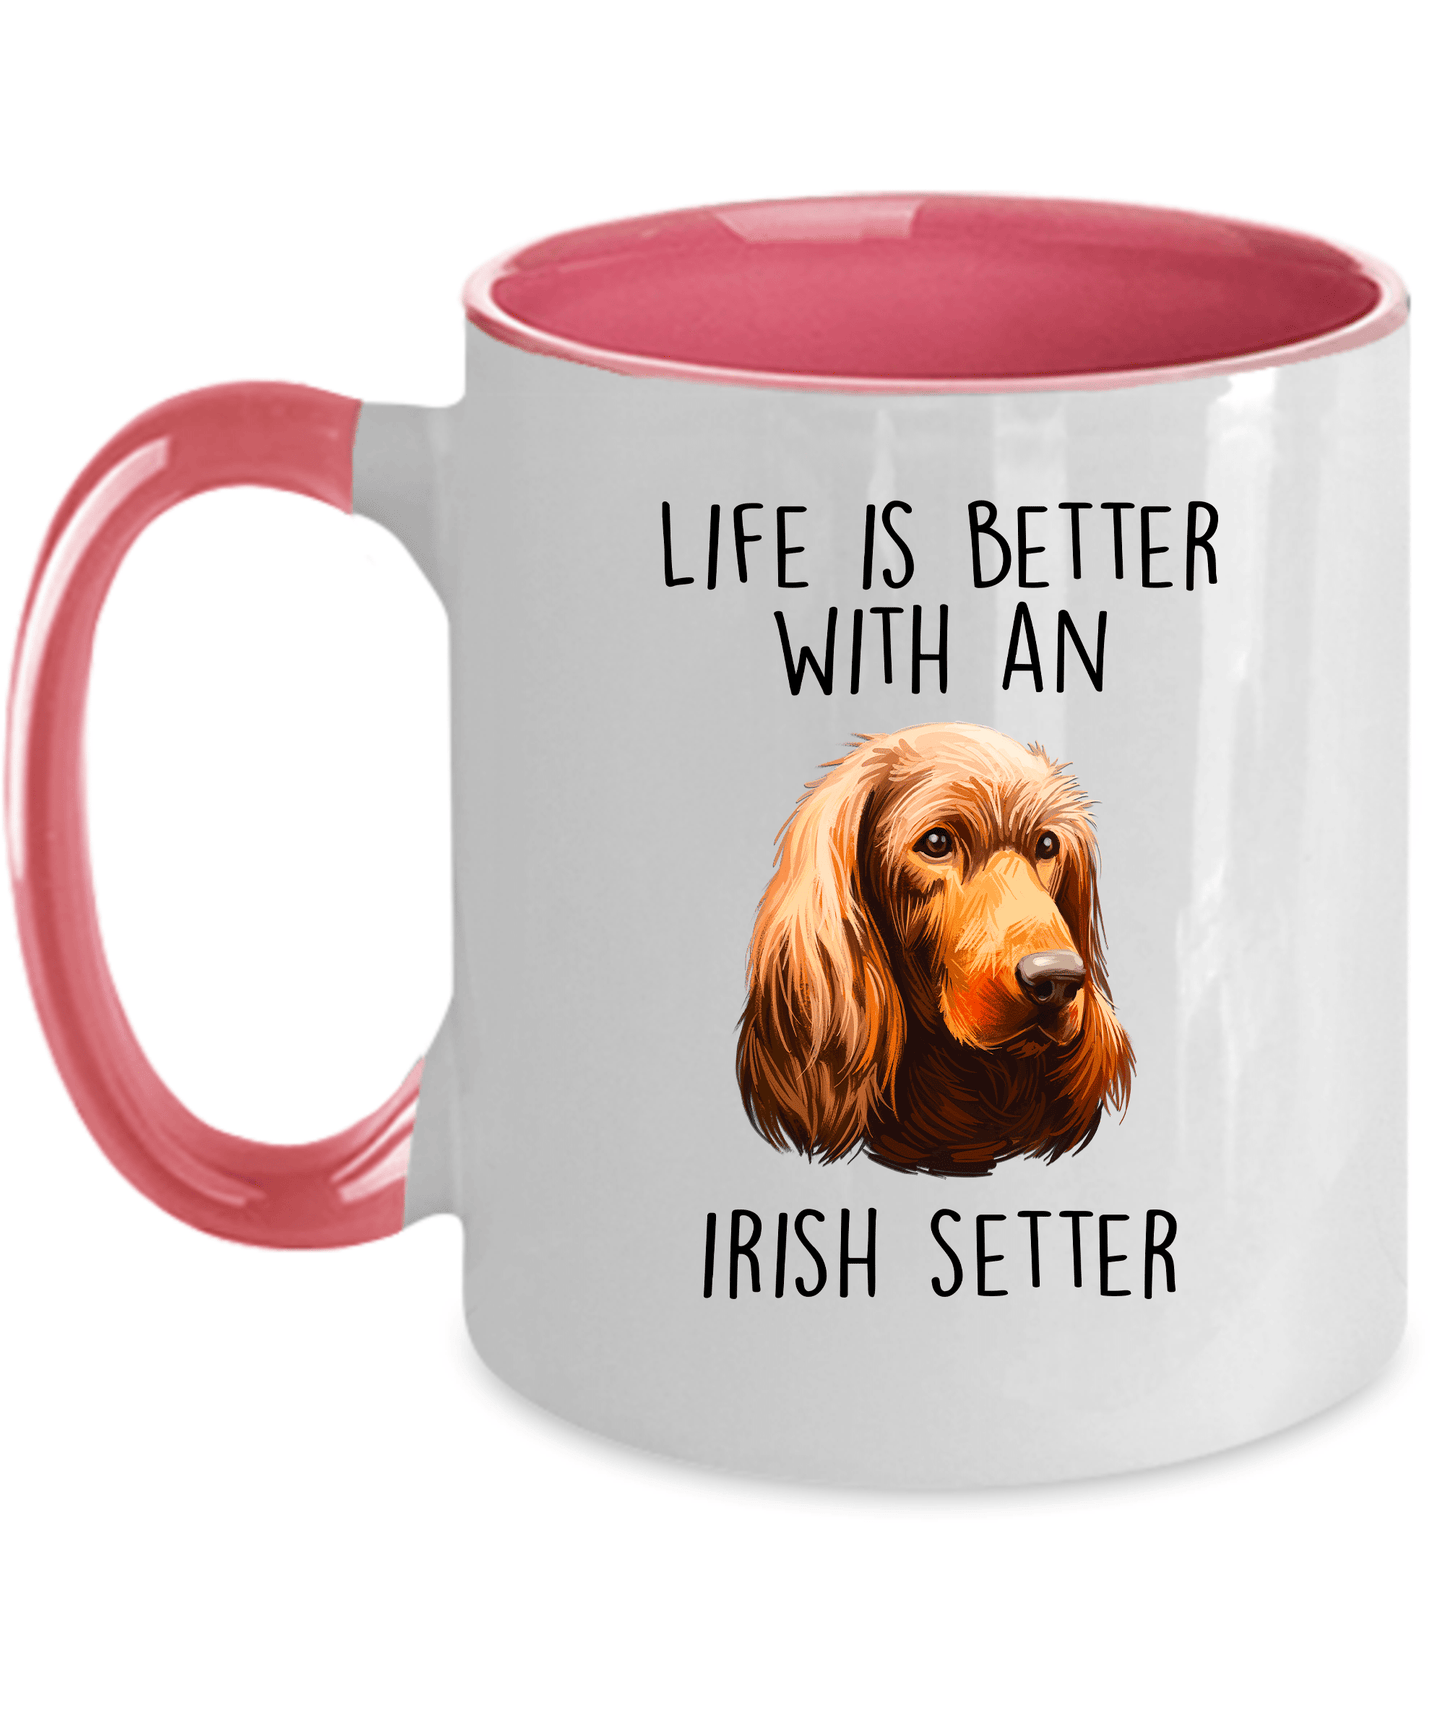 Life is Better with an Irish Setter Dog Ceramic Coffee Mug